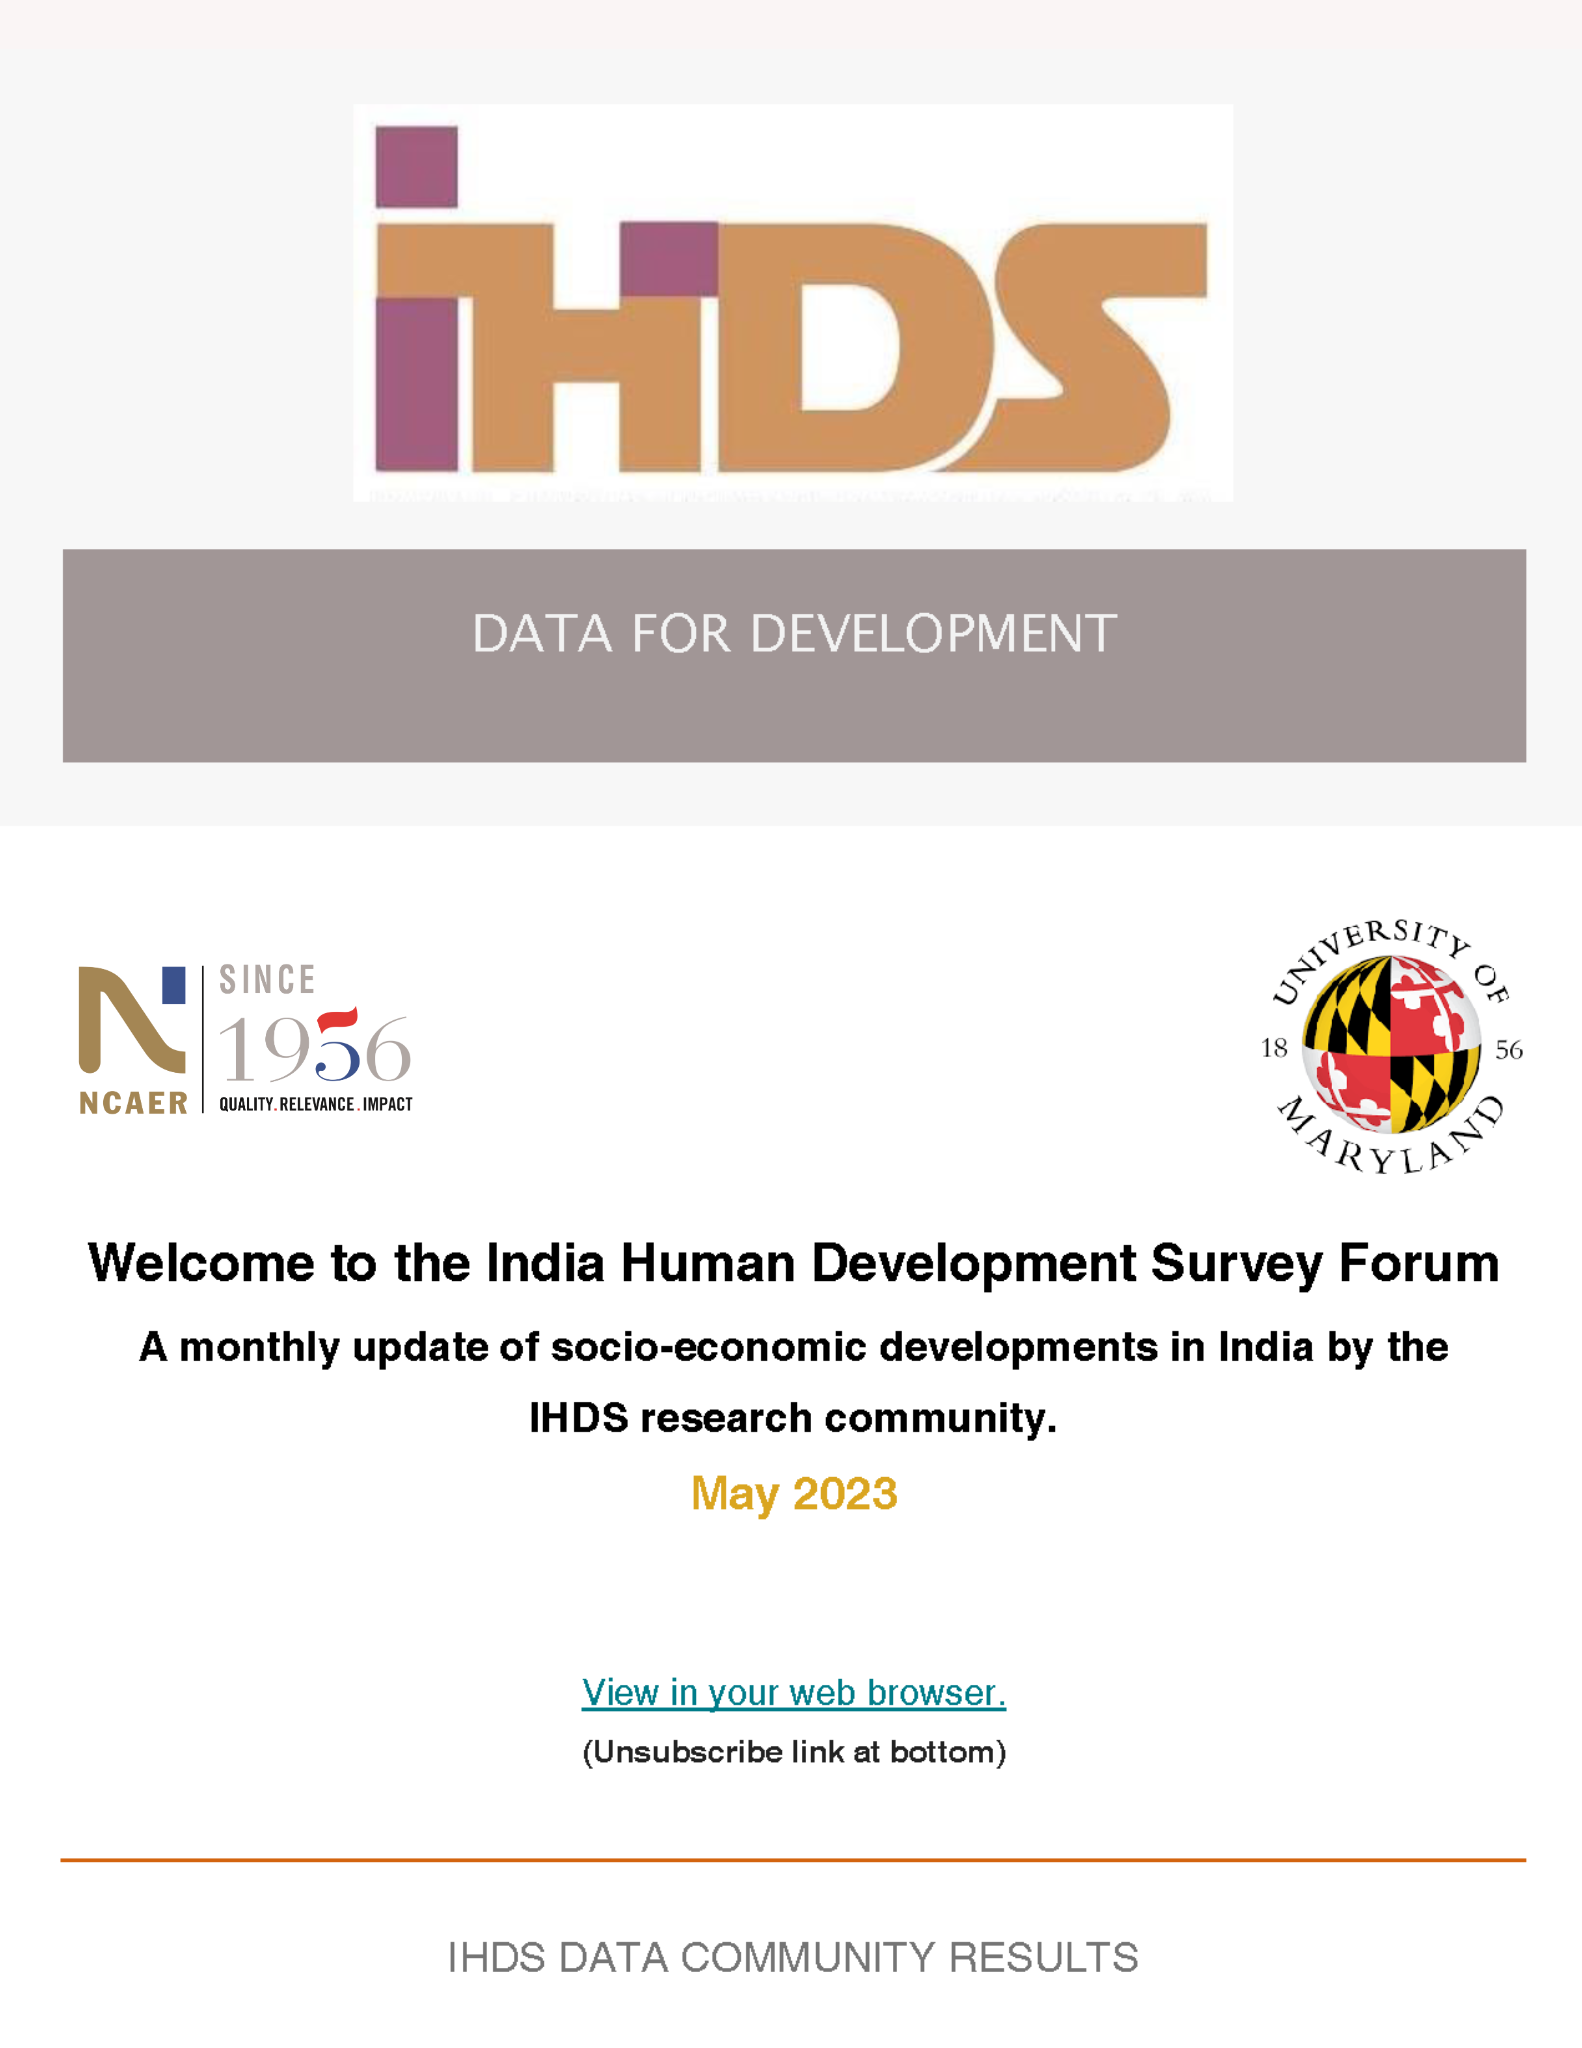 India Human Development Survey Forum, May 2023